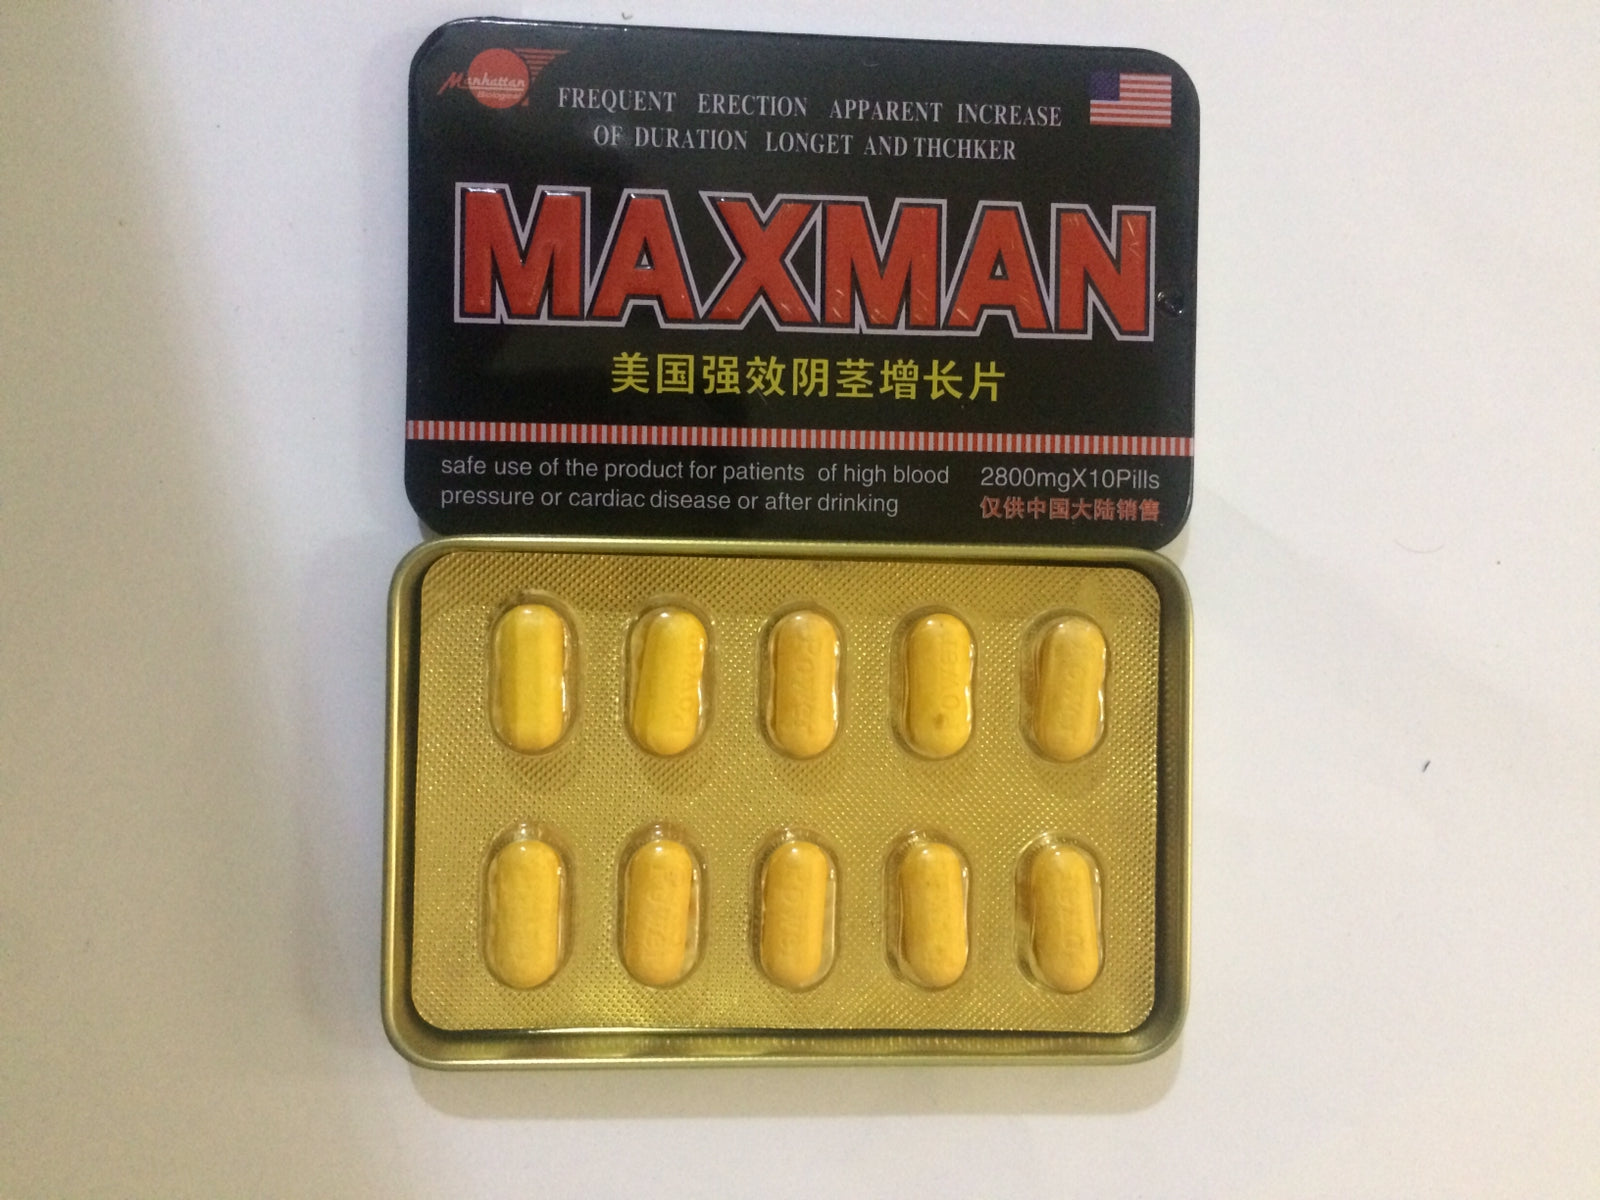 Maxman 2000mg x 10Pills